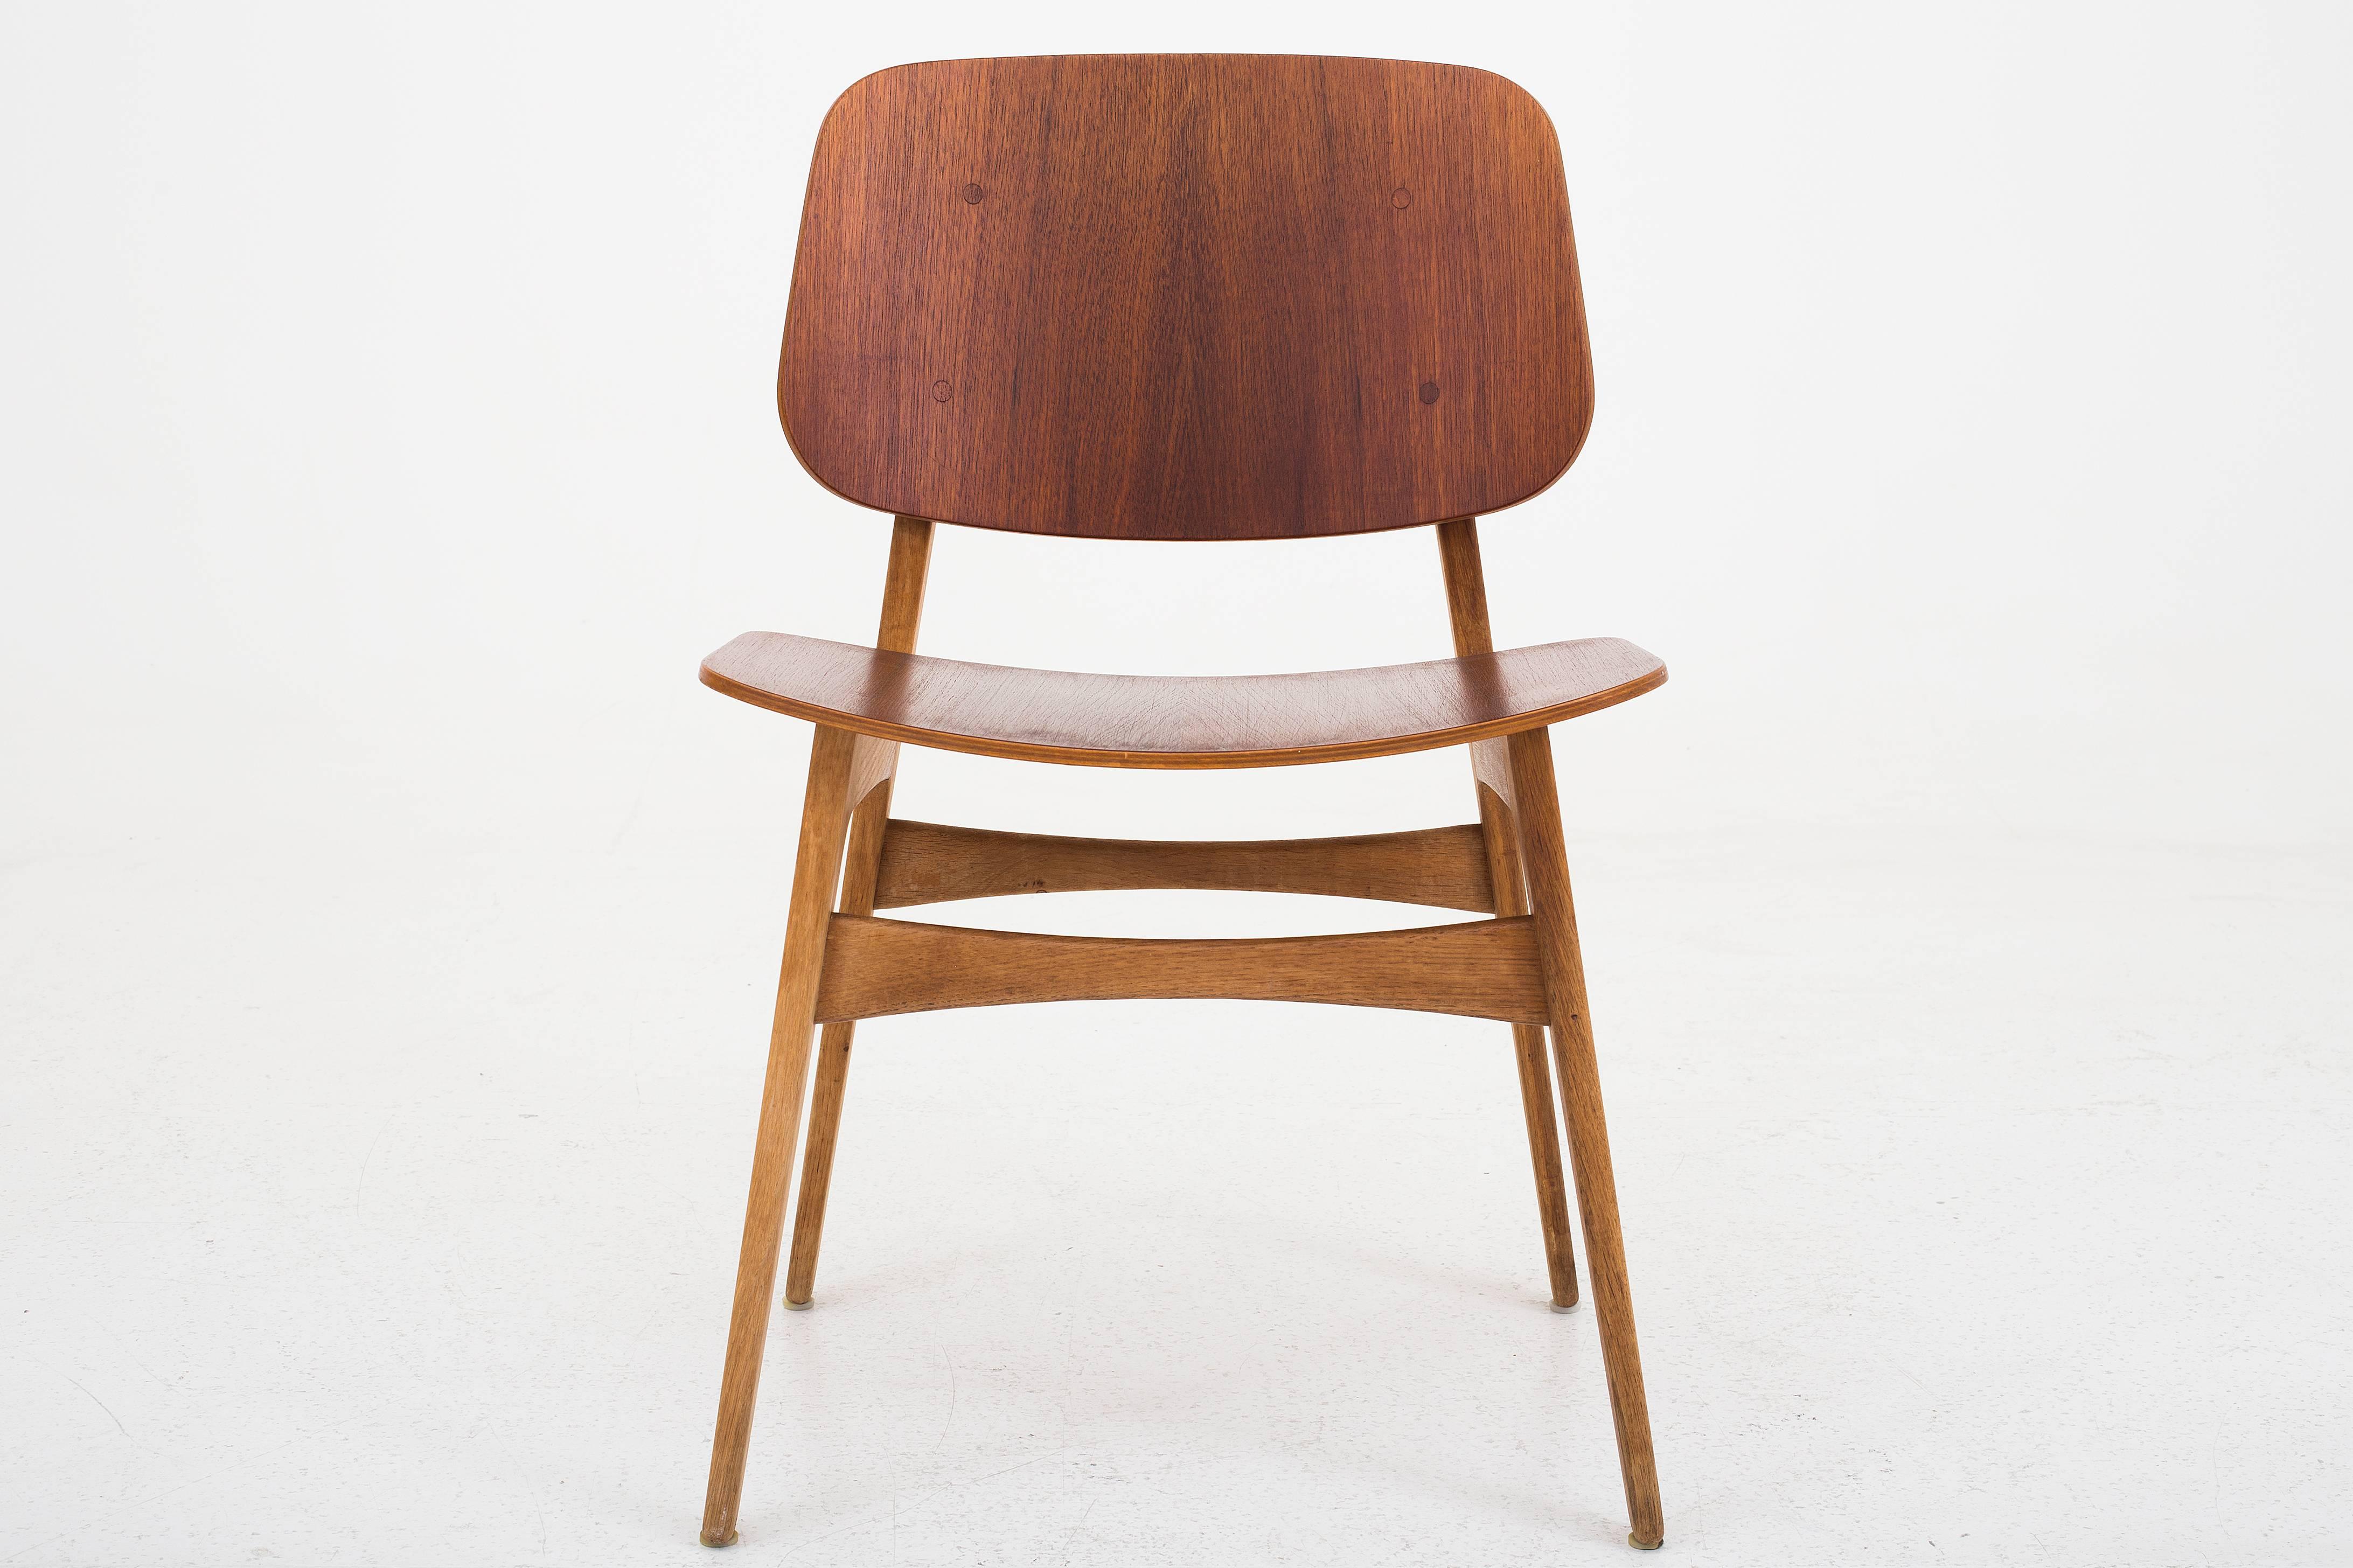 A set of six dining chairs in teak and oak designed by Børge Mogensen. Maker Søborg Furniture.